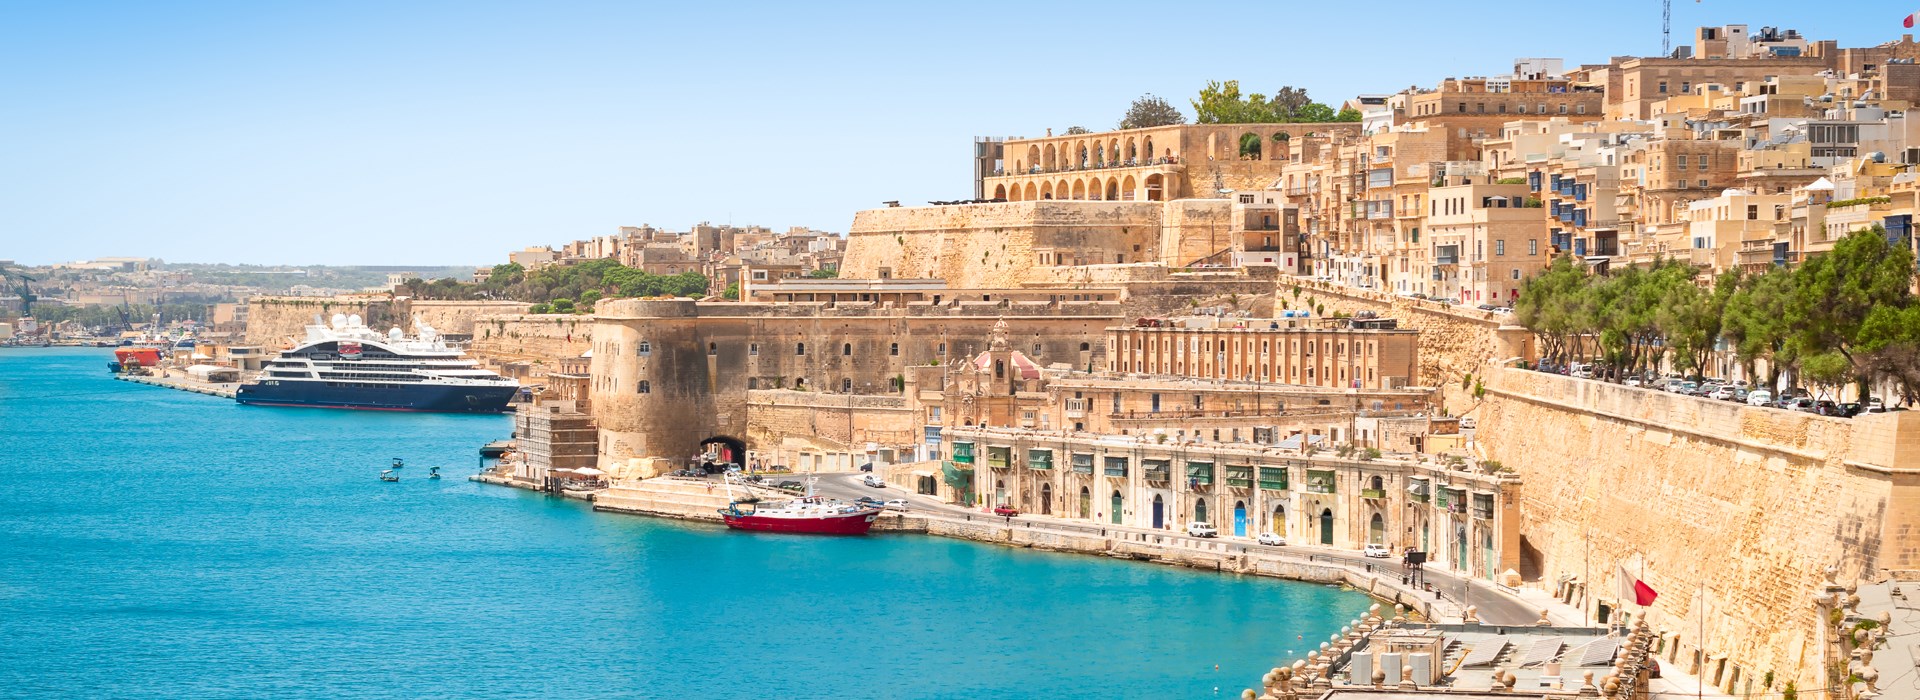 Visiter L'île de Malte  - Malte